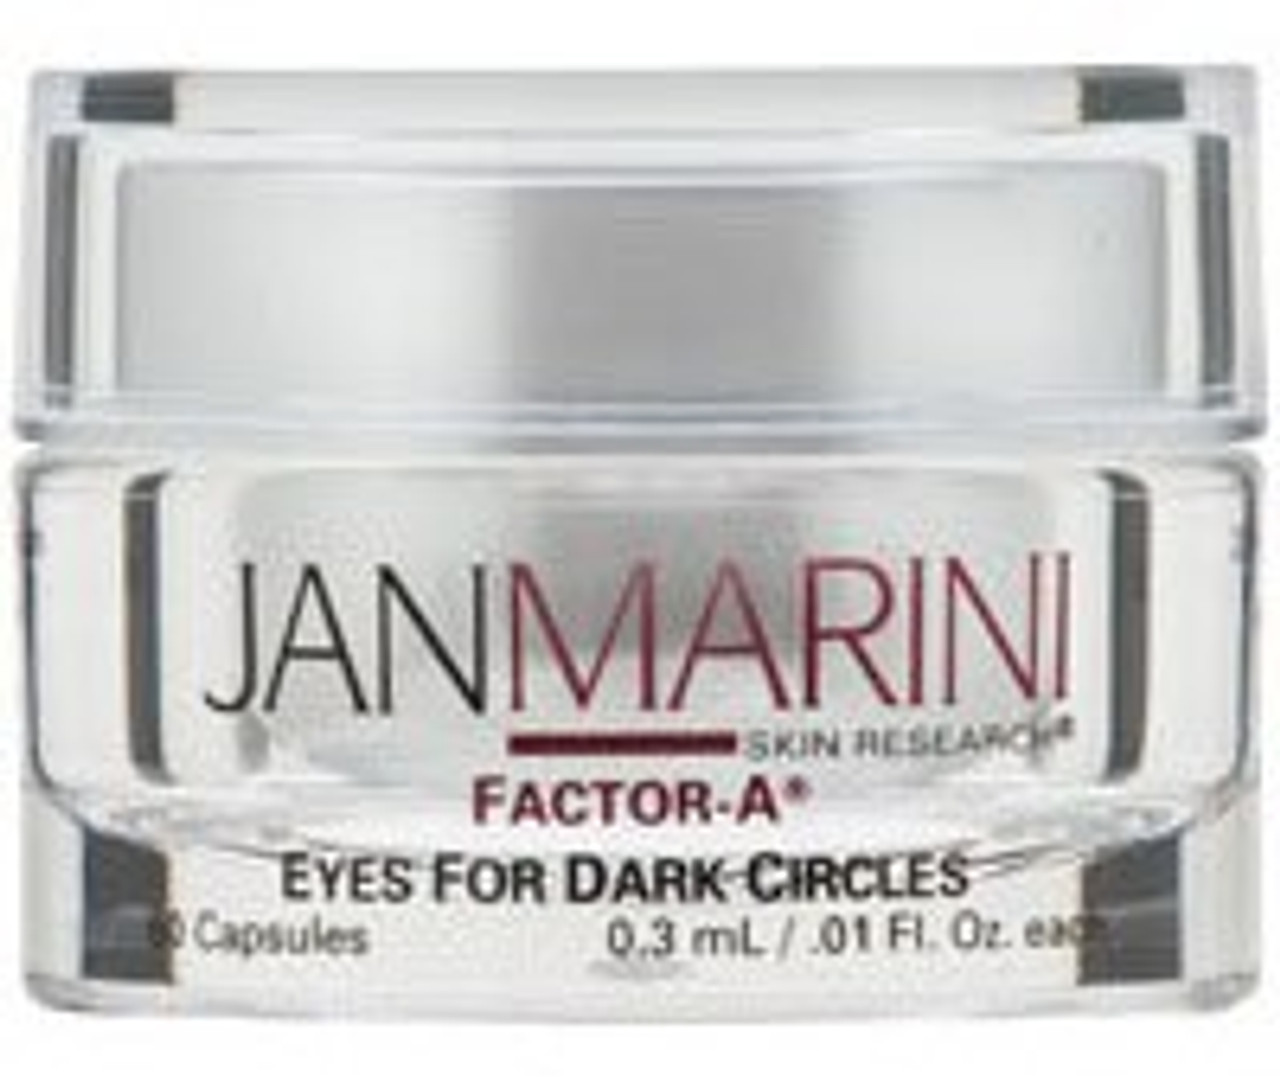 Jan Marini Factor A Eyes for Dark Circles, 60 capsules